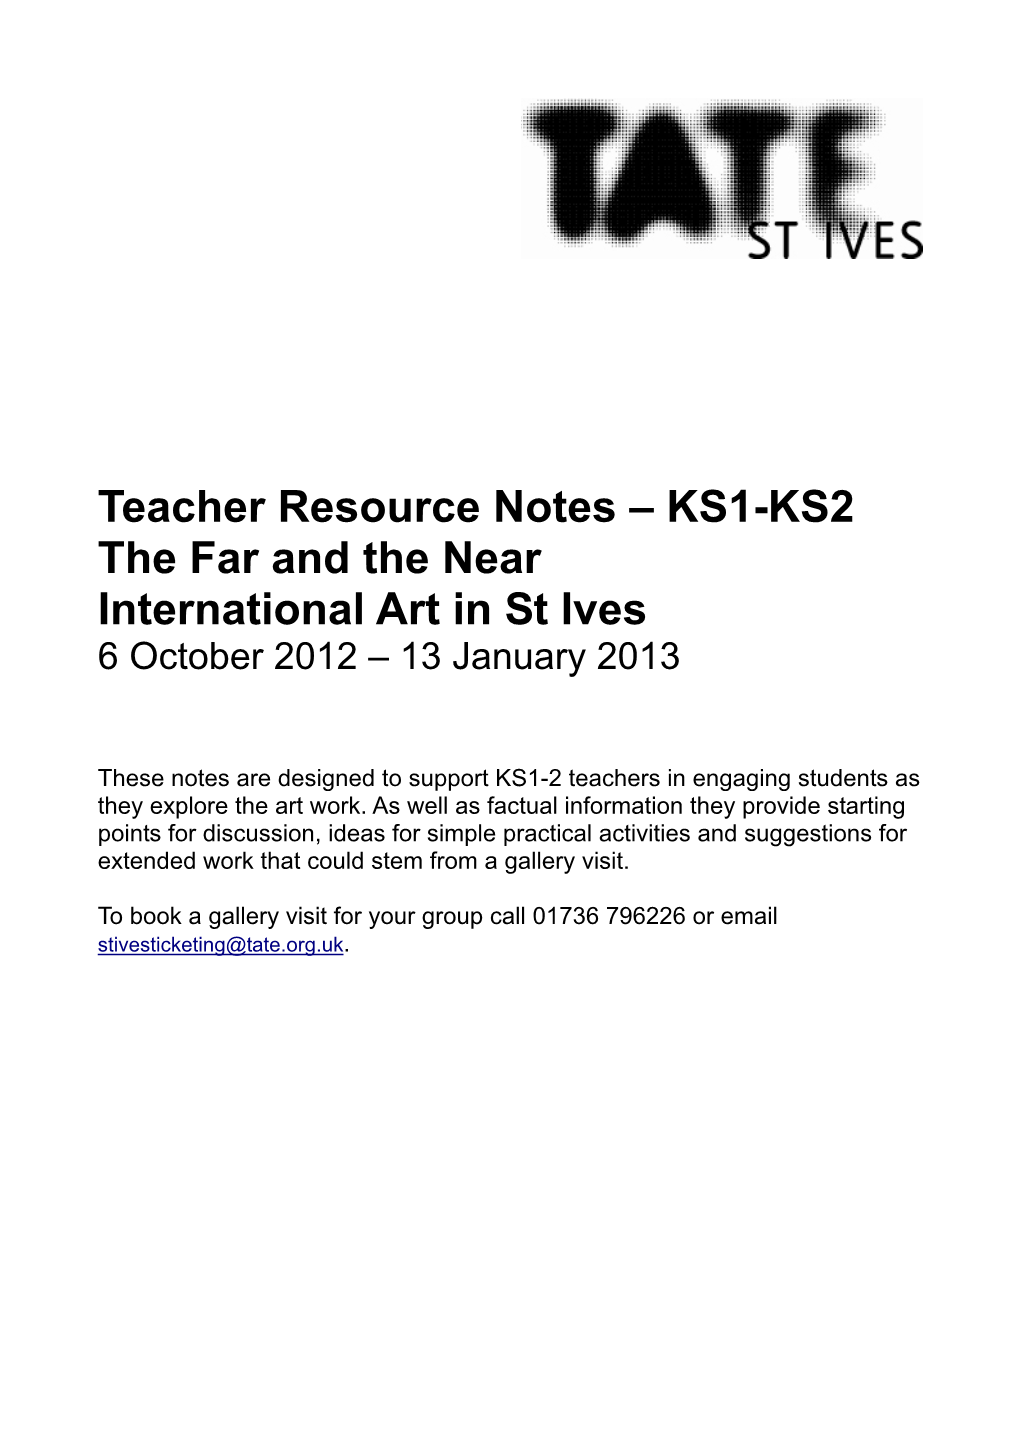 Teacher Resource Notes – KS1-KS2 the Far and the Near International Art in St Ives 6 October 2012 – 13 January 2013